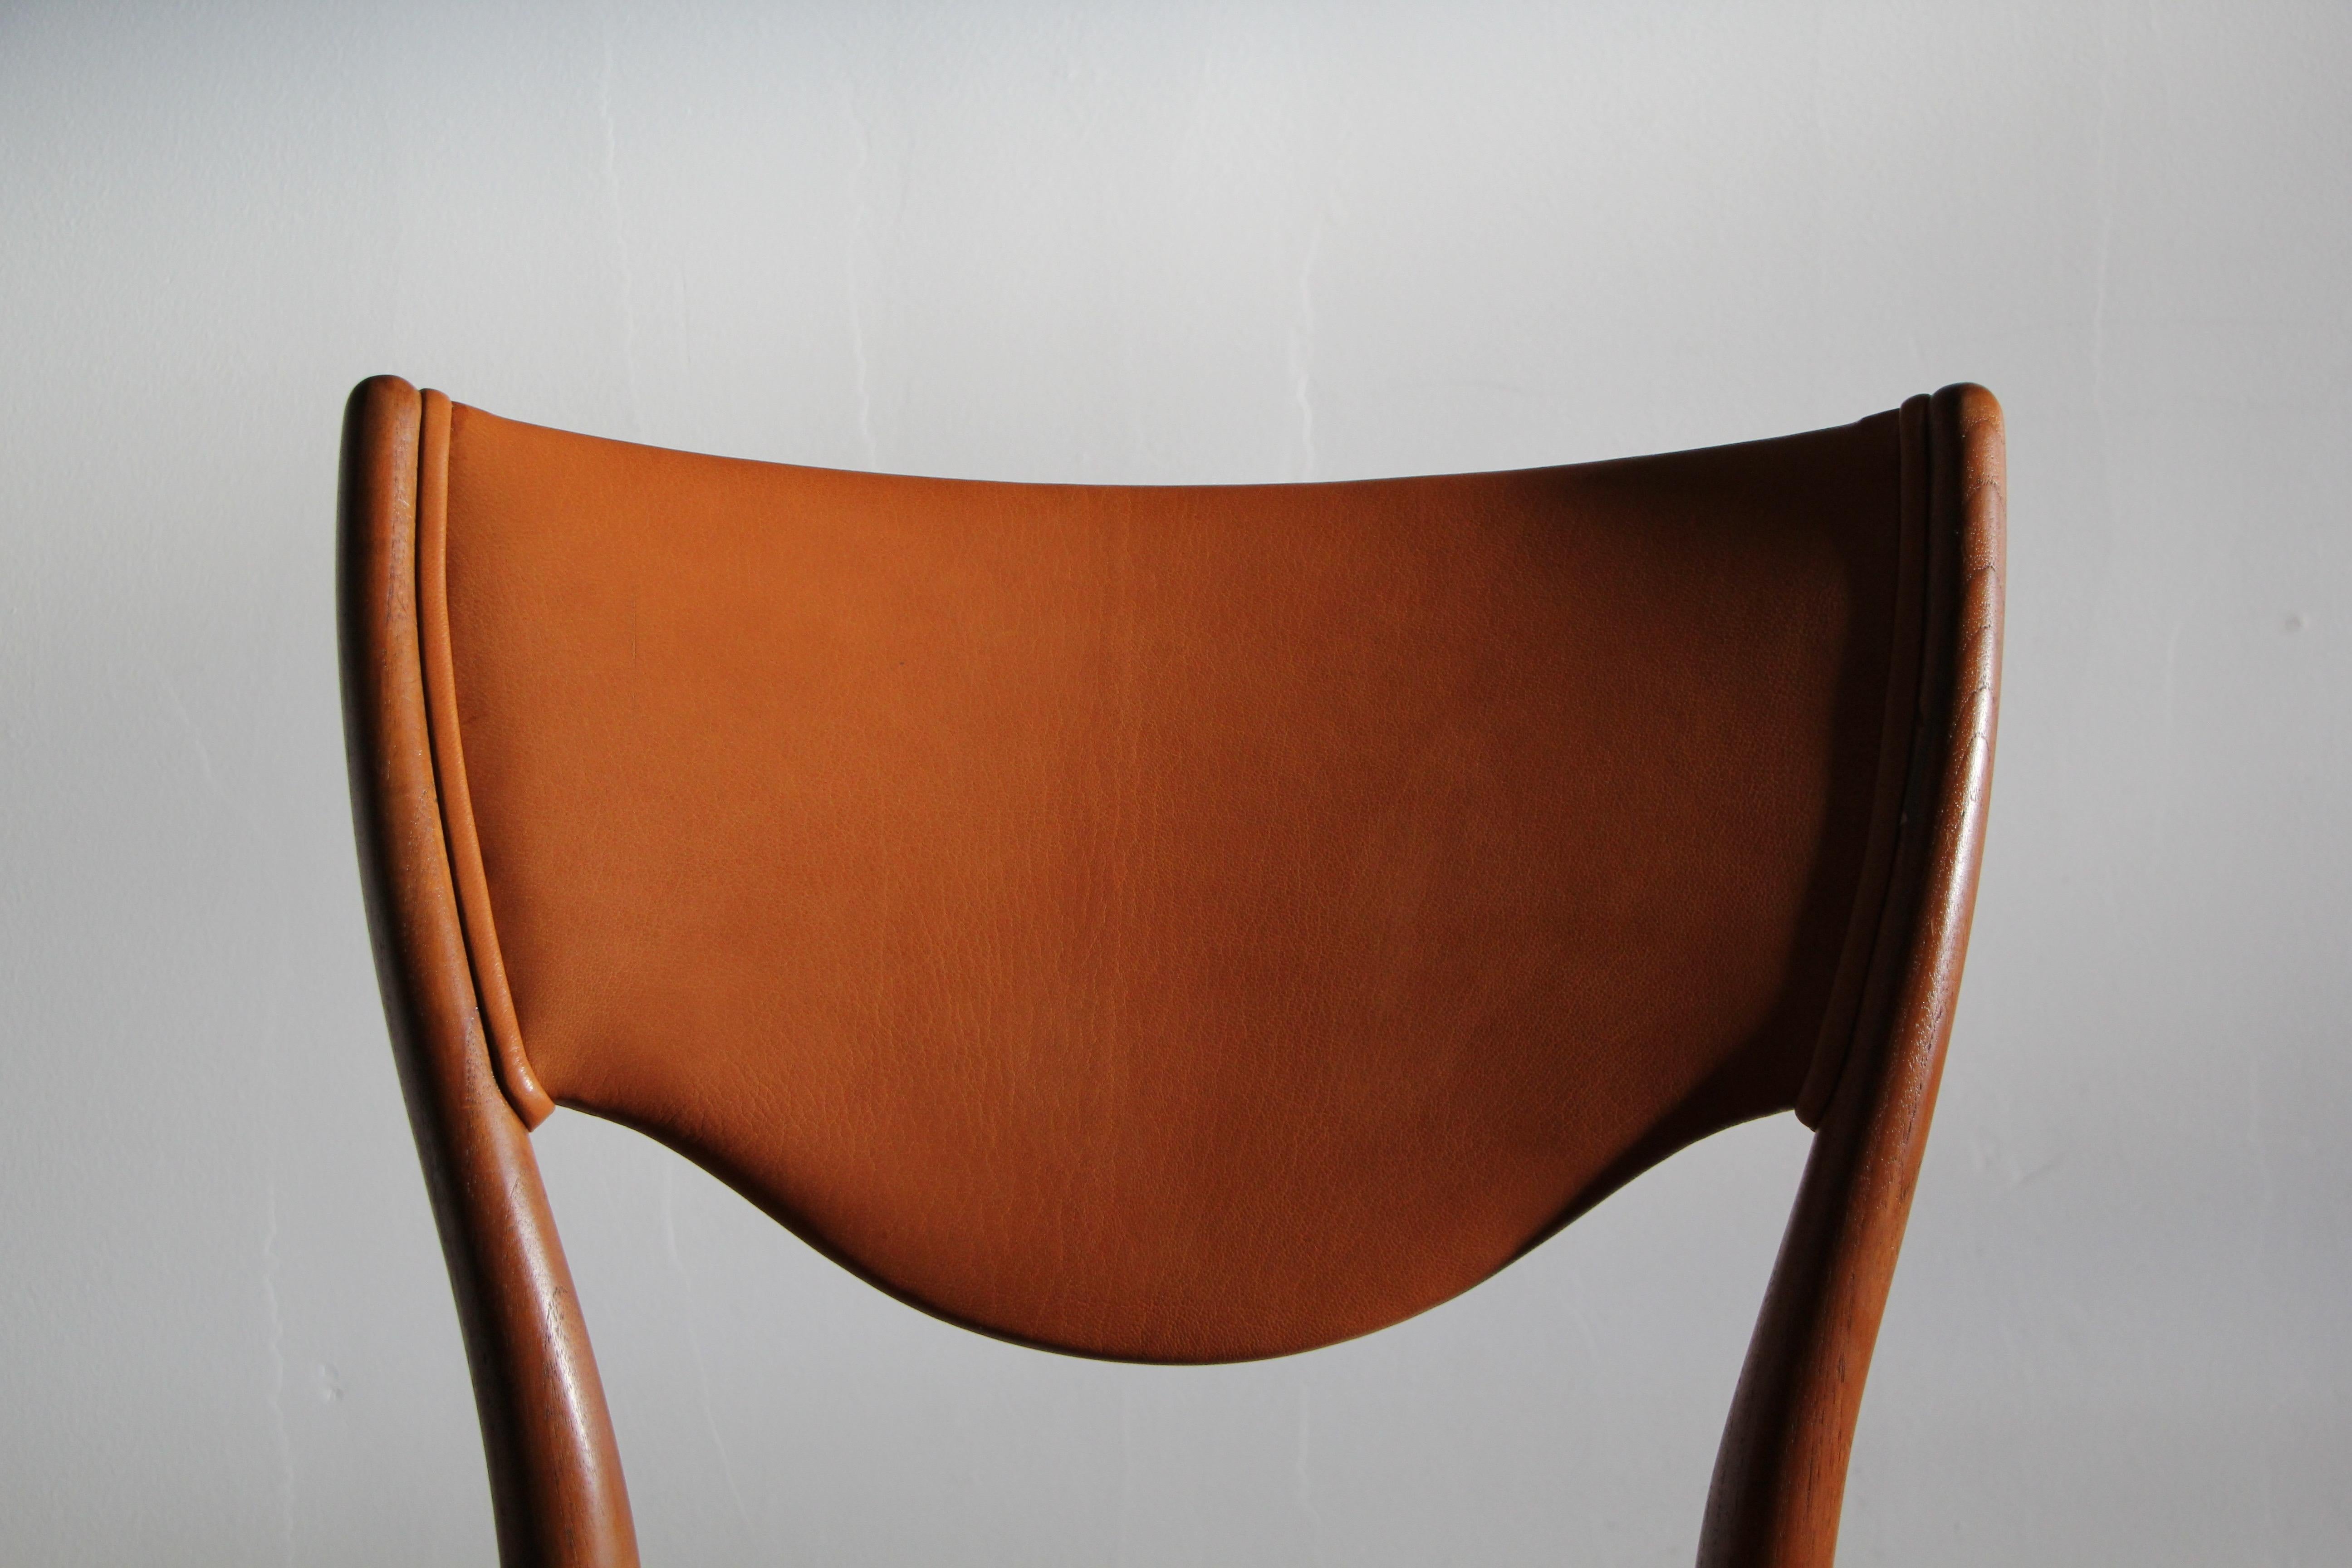 Finn Juhl “BO 63” Sculpted Teak Dining Chairs in Cognac Goatskin Leather, 1950s In Good Condition For Sale In Coronado, CA